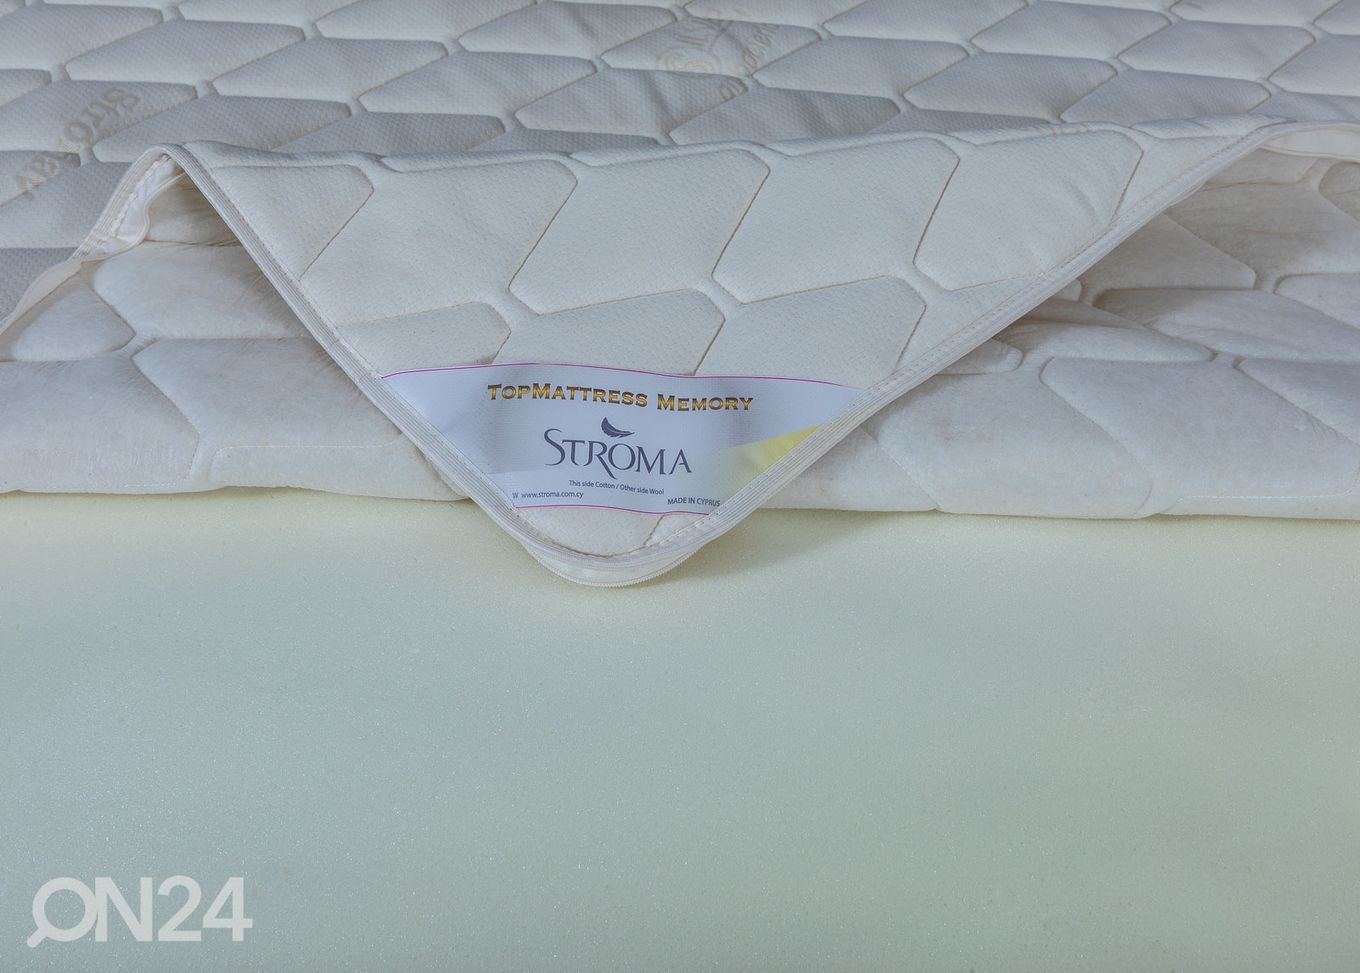 Stroma kattemadrats Top Memory 120x200x5 cm suurendatud